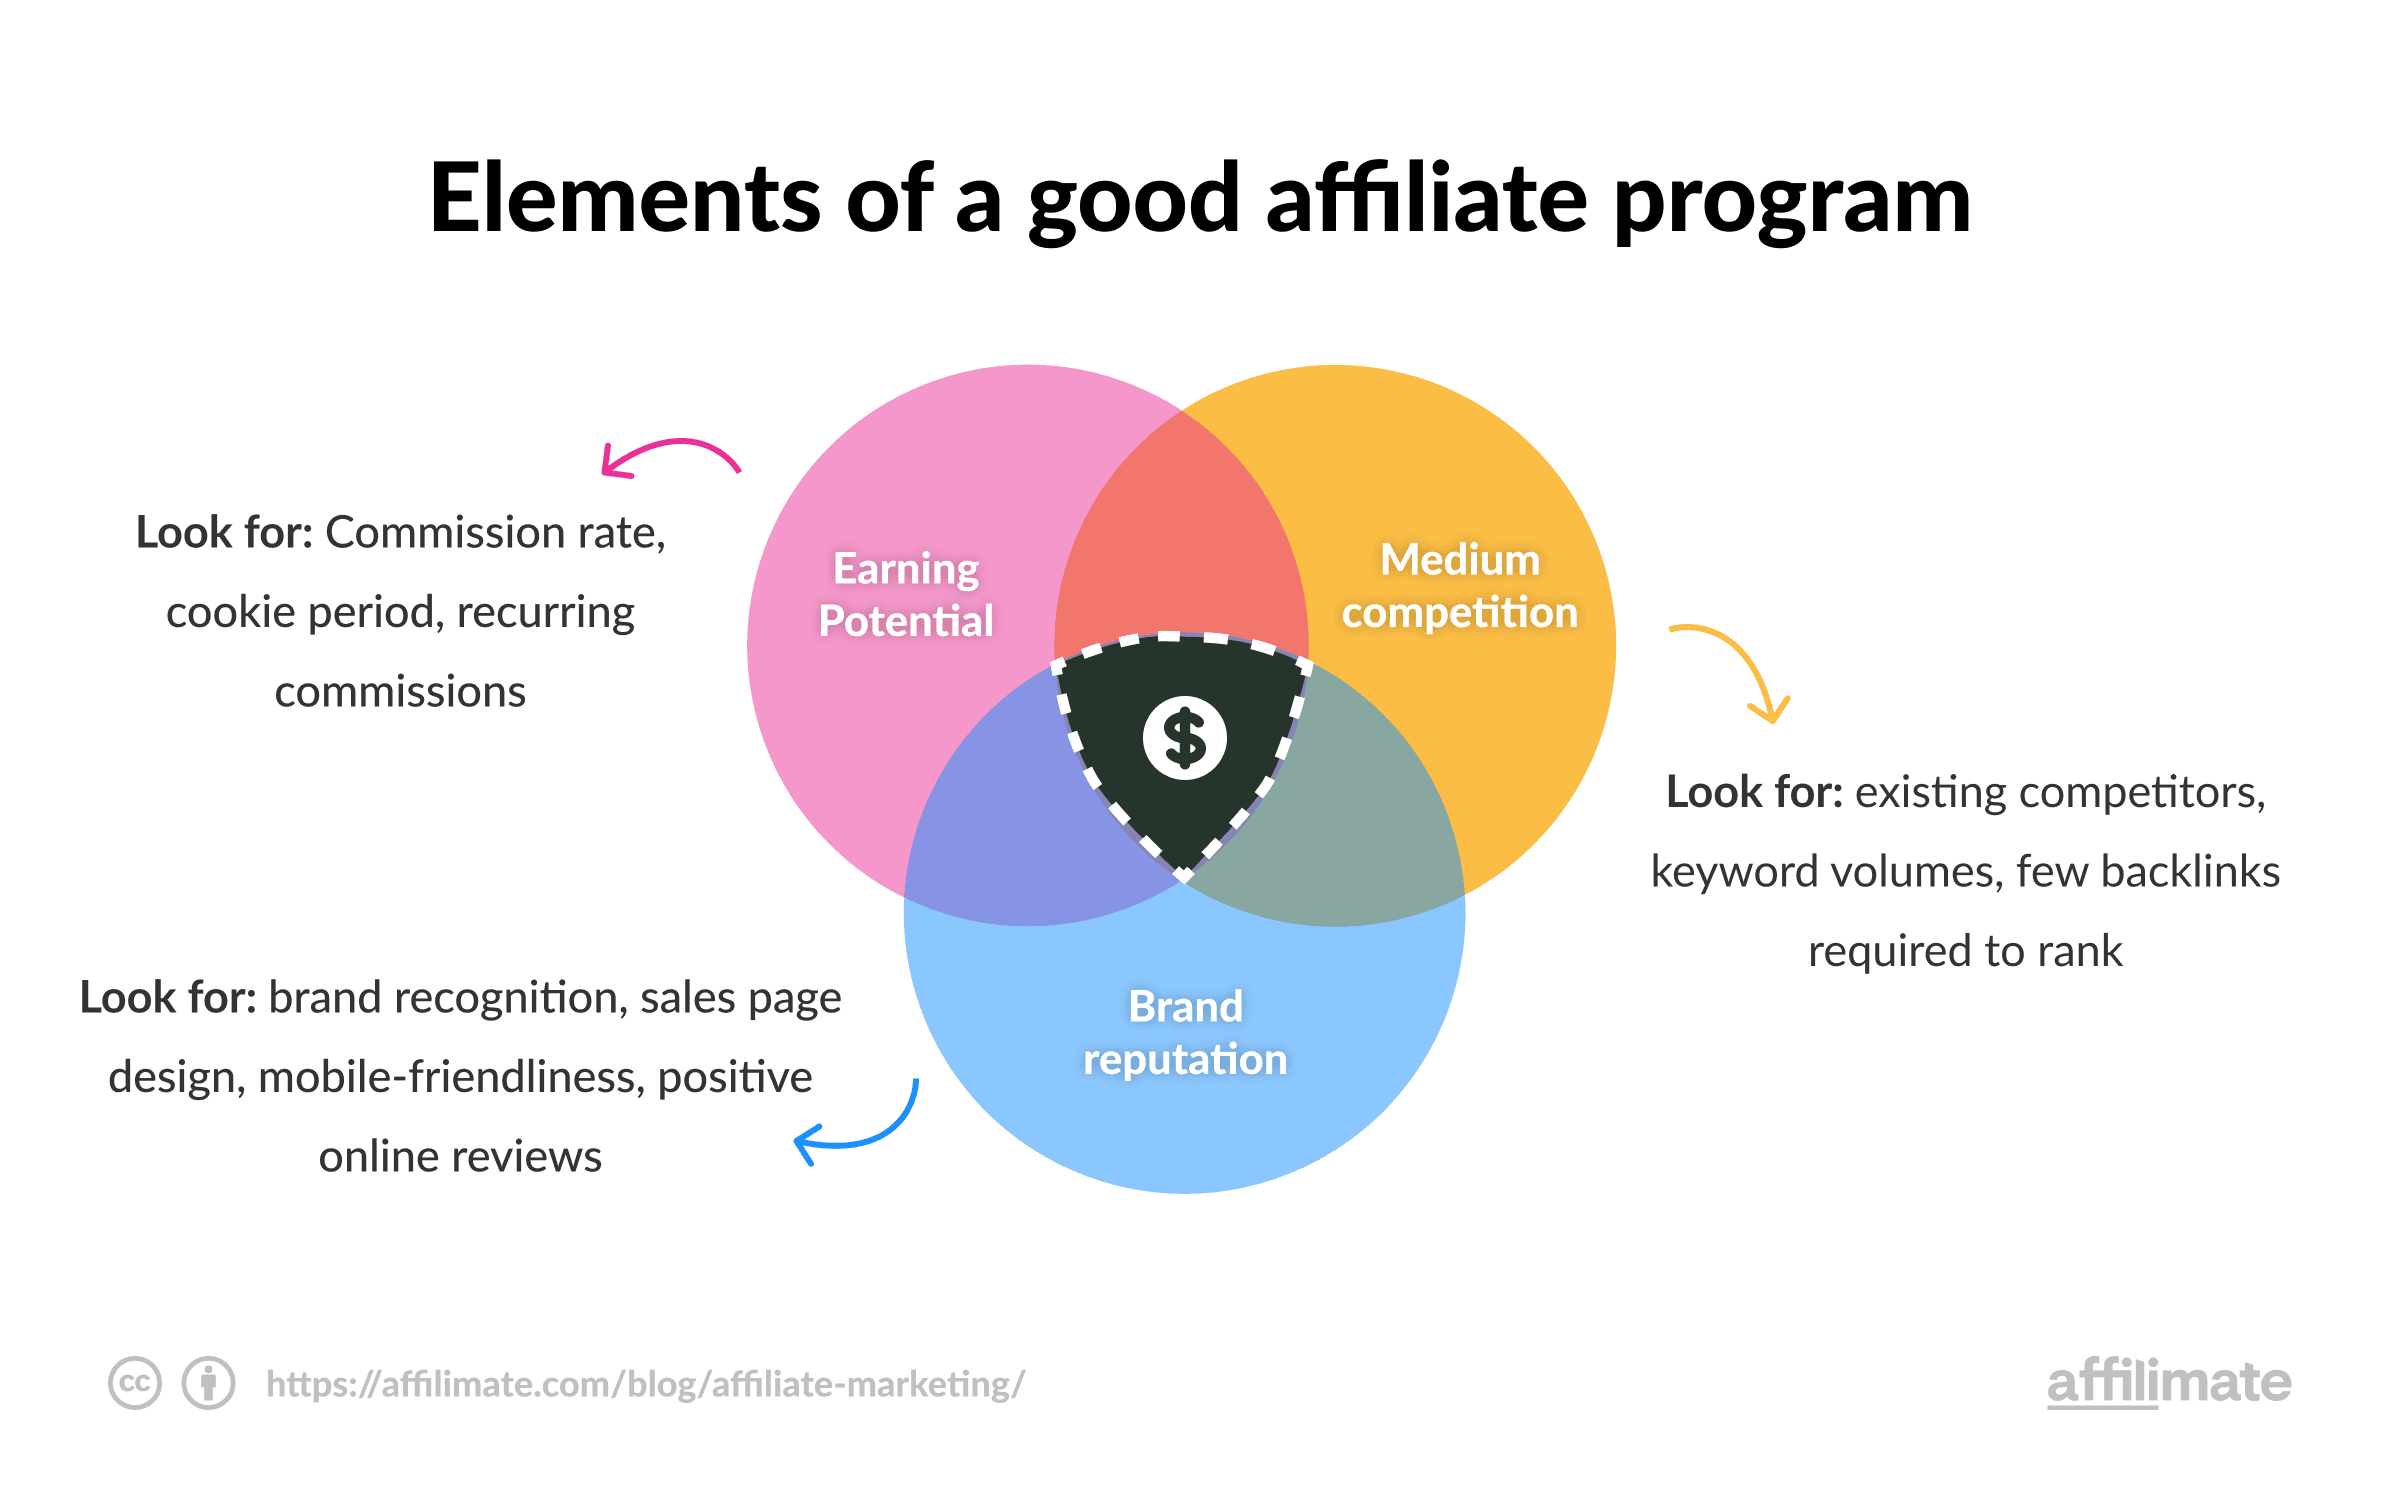 Elements of a good affiliate program